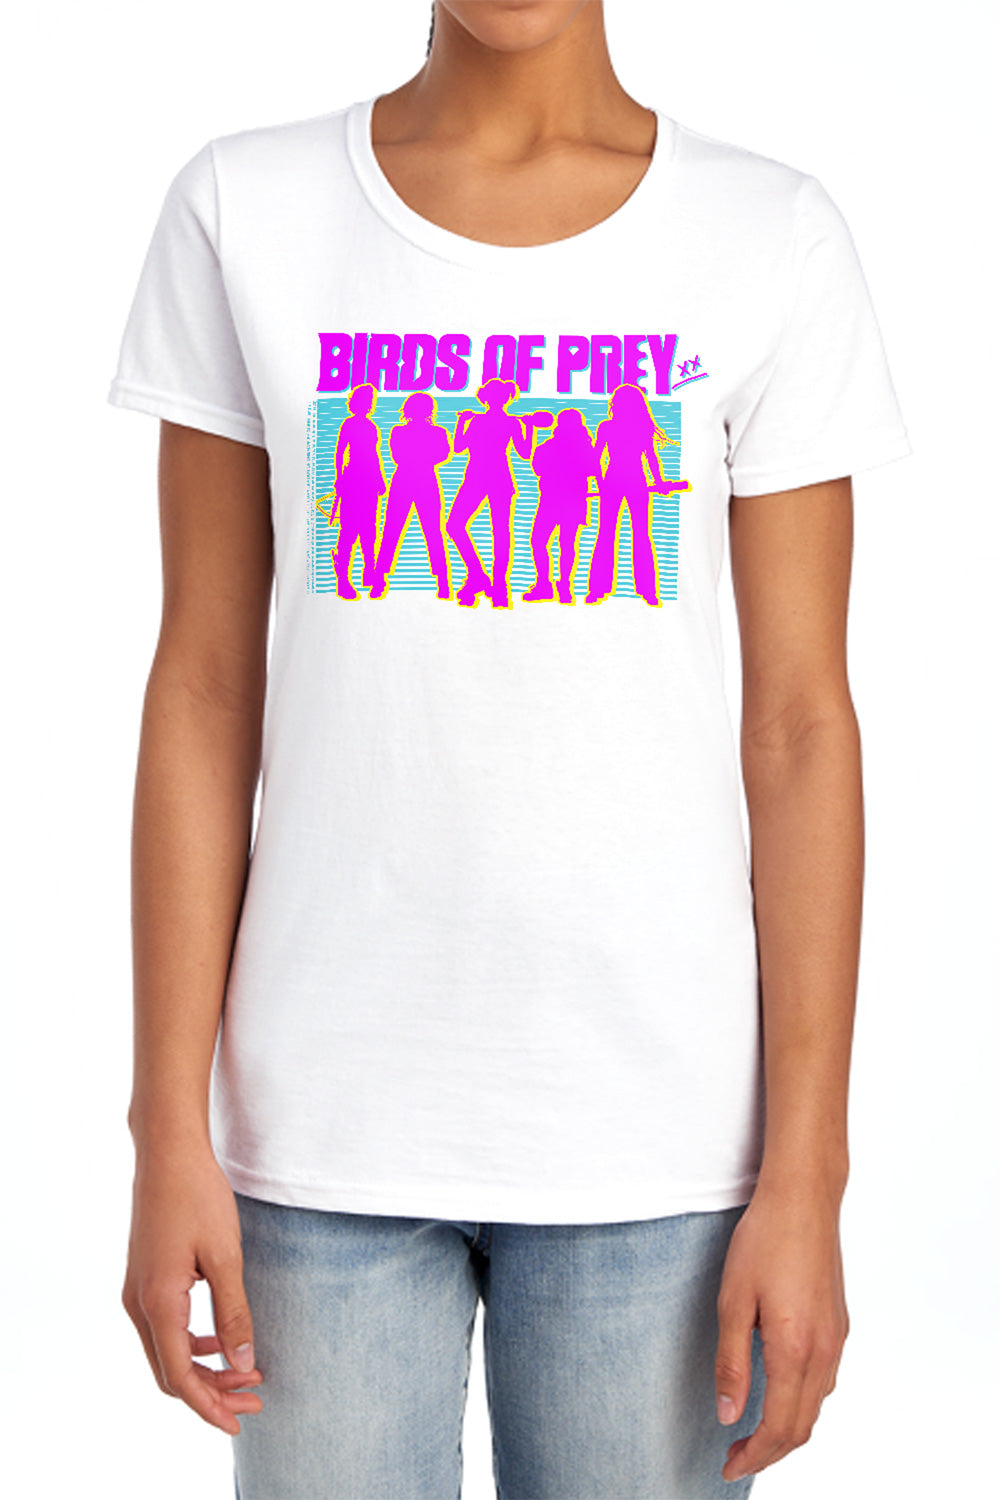 BIRDS OF PREY : SILHOUETTES WOMENS SHORT SLEEVE White SM